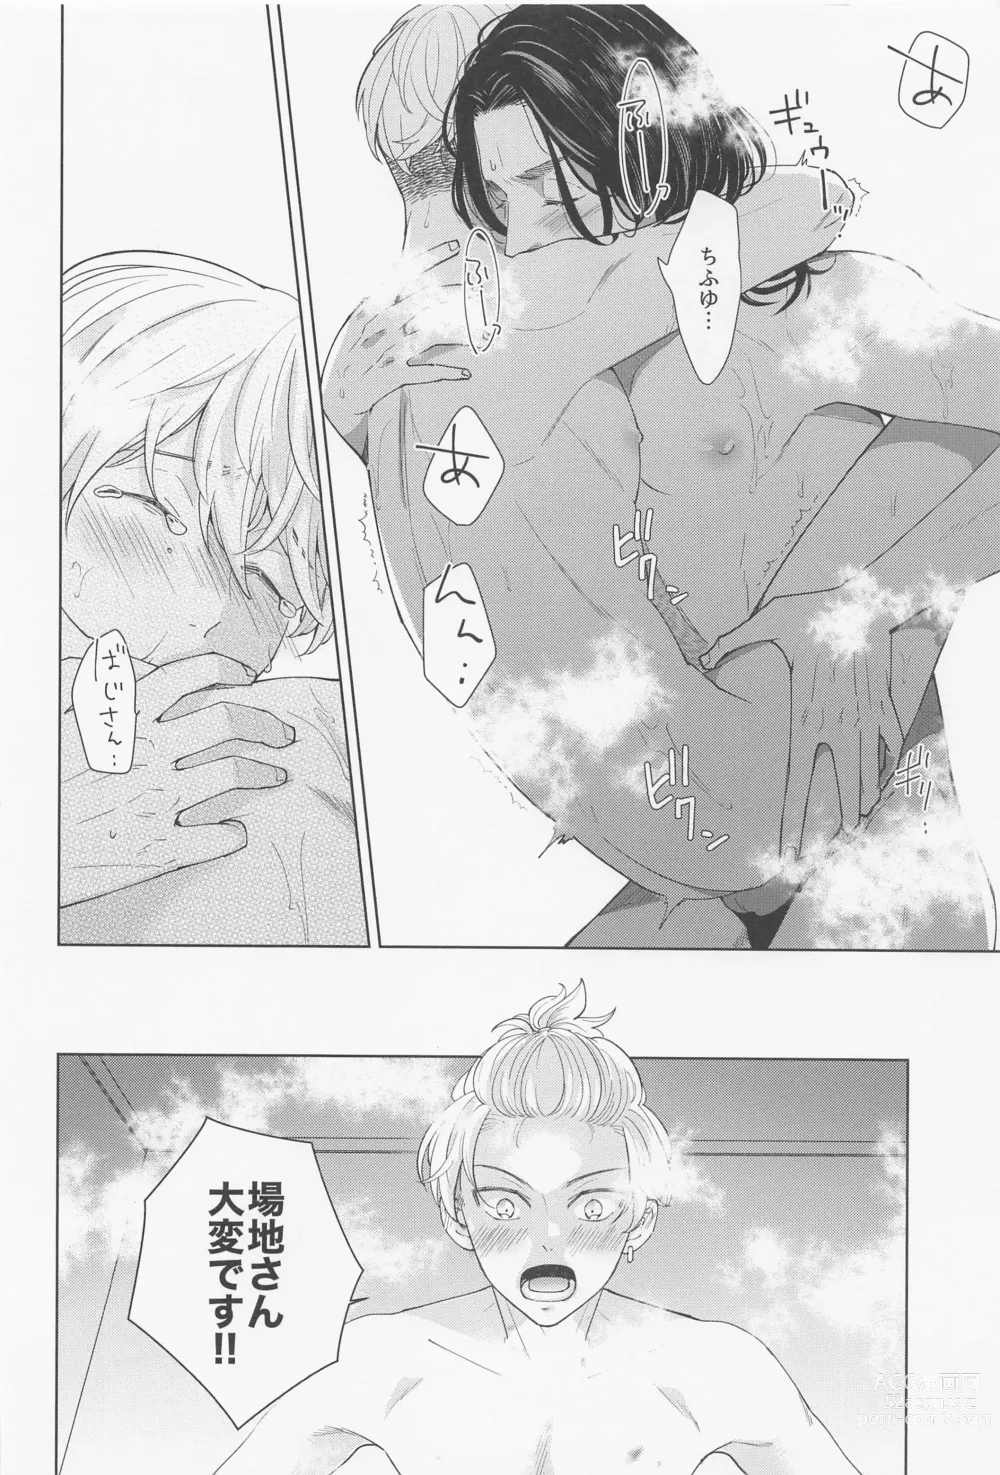 Page 61 of doujinshi Hopeless Romantic